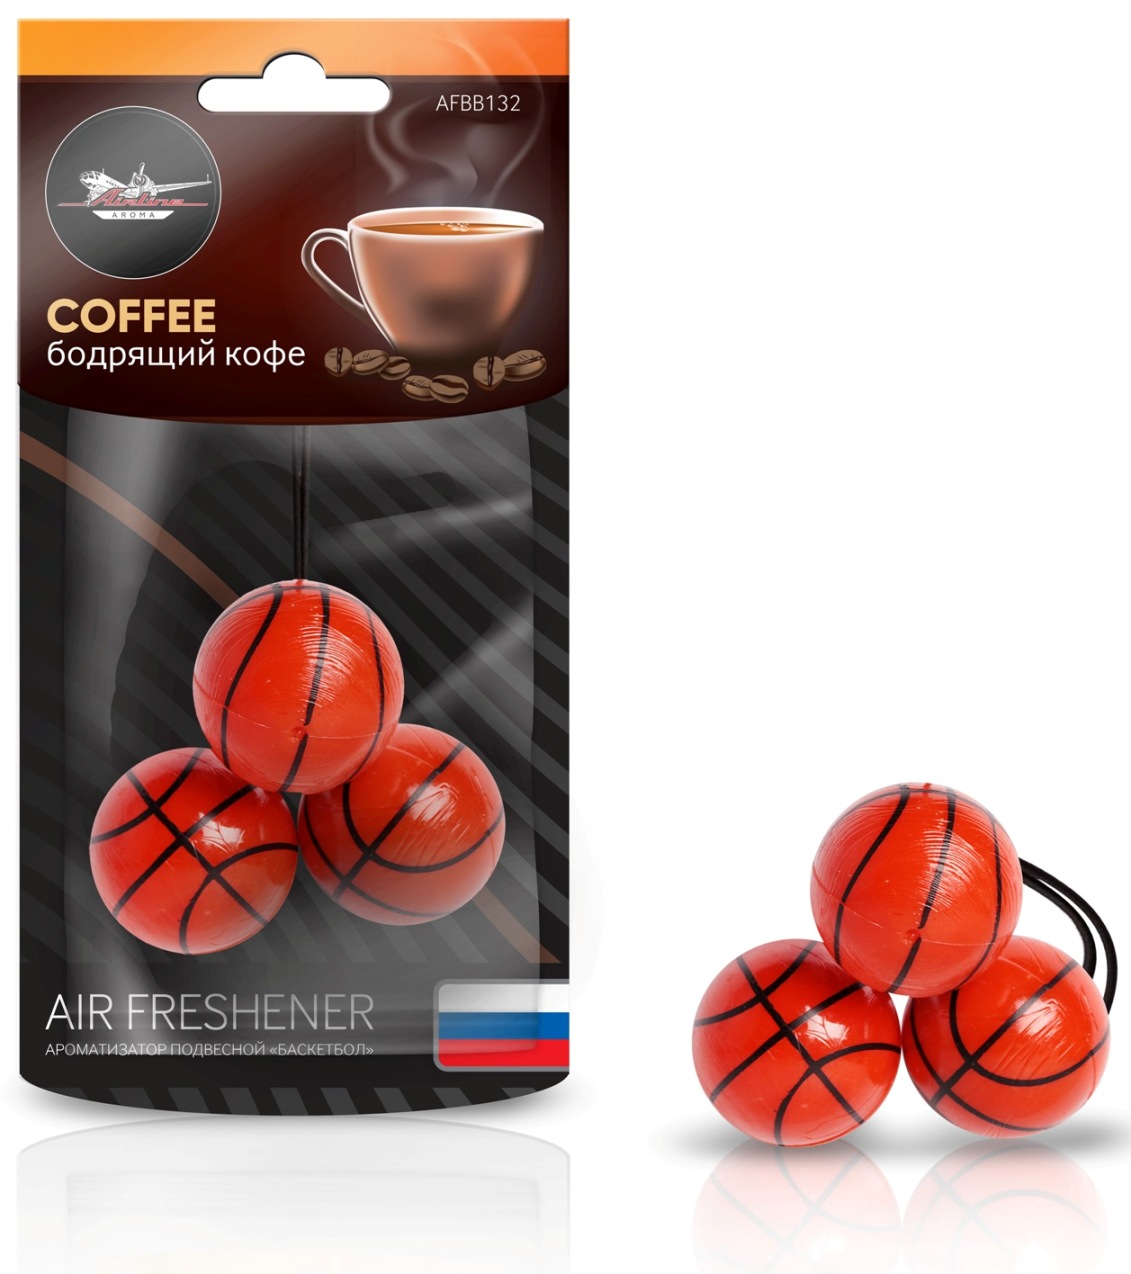 Ароматизатор подвесной Баскетбол бодрящий кофе (AFBB132)(доставка 2-3 часа)